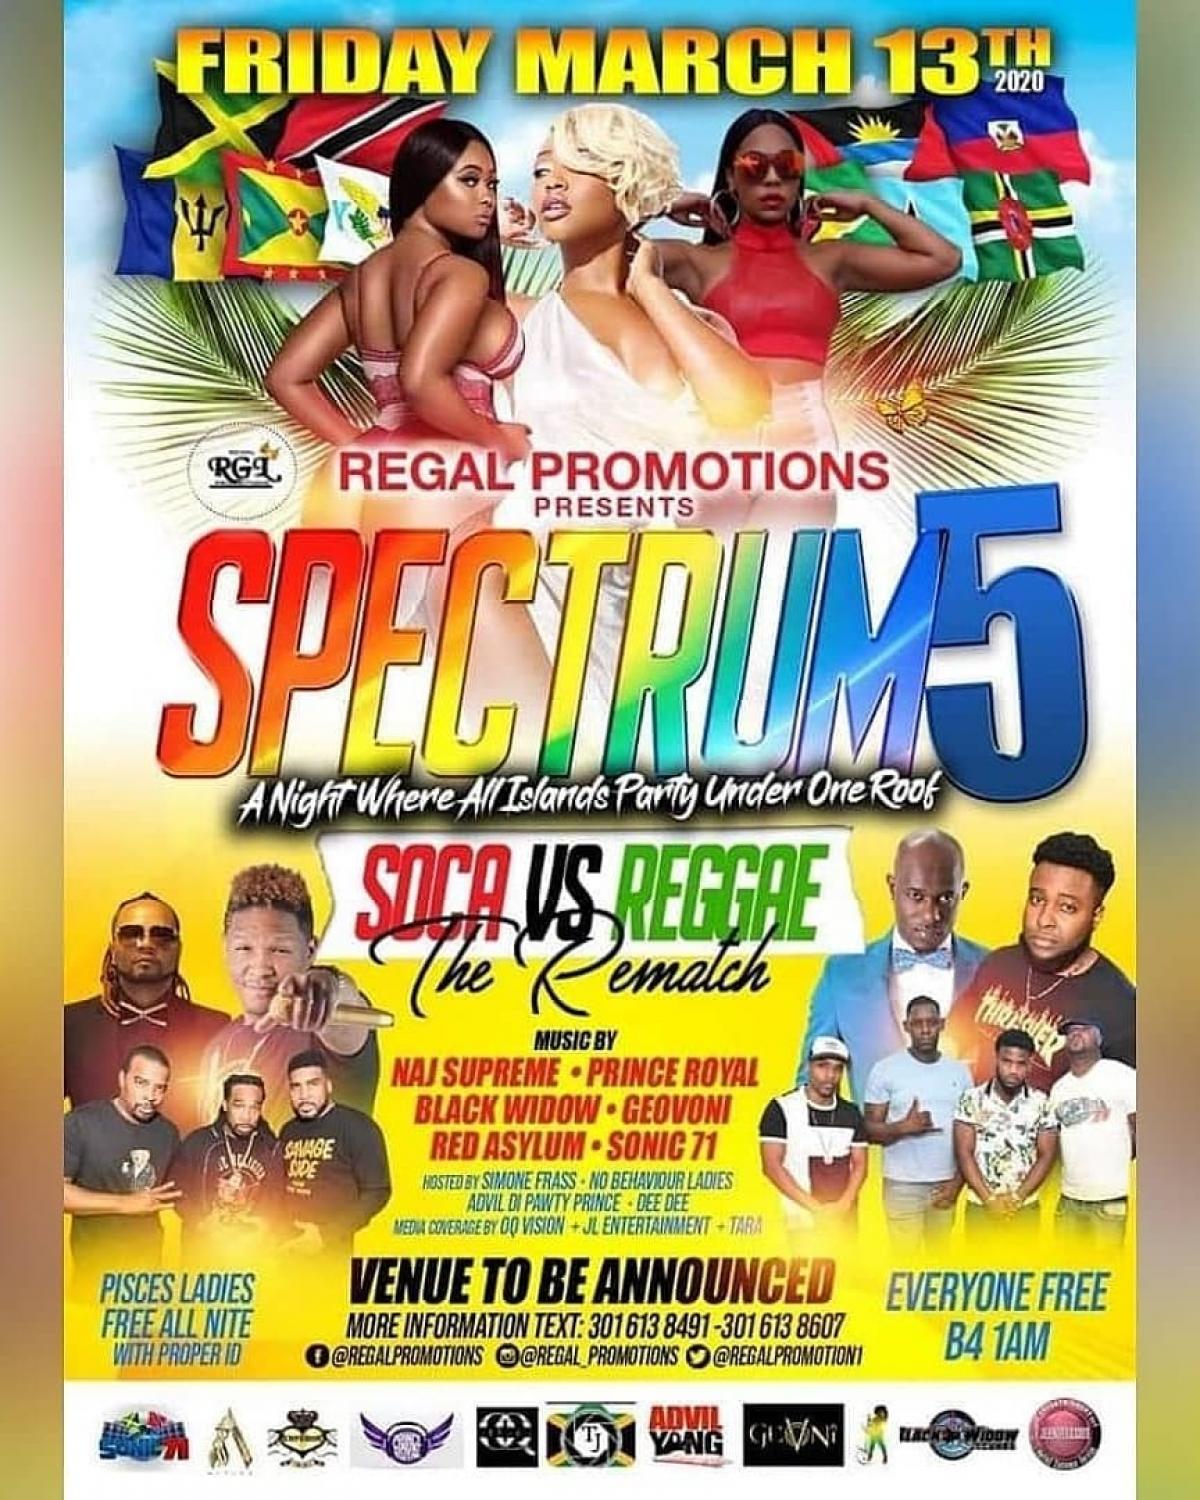 Spectrum 5: Soca vs. Reggae The Rematch flyer or graphic.